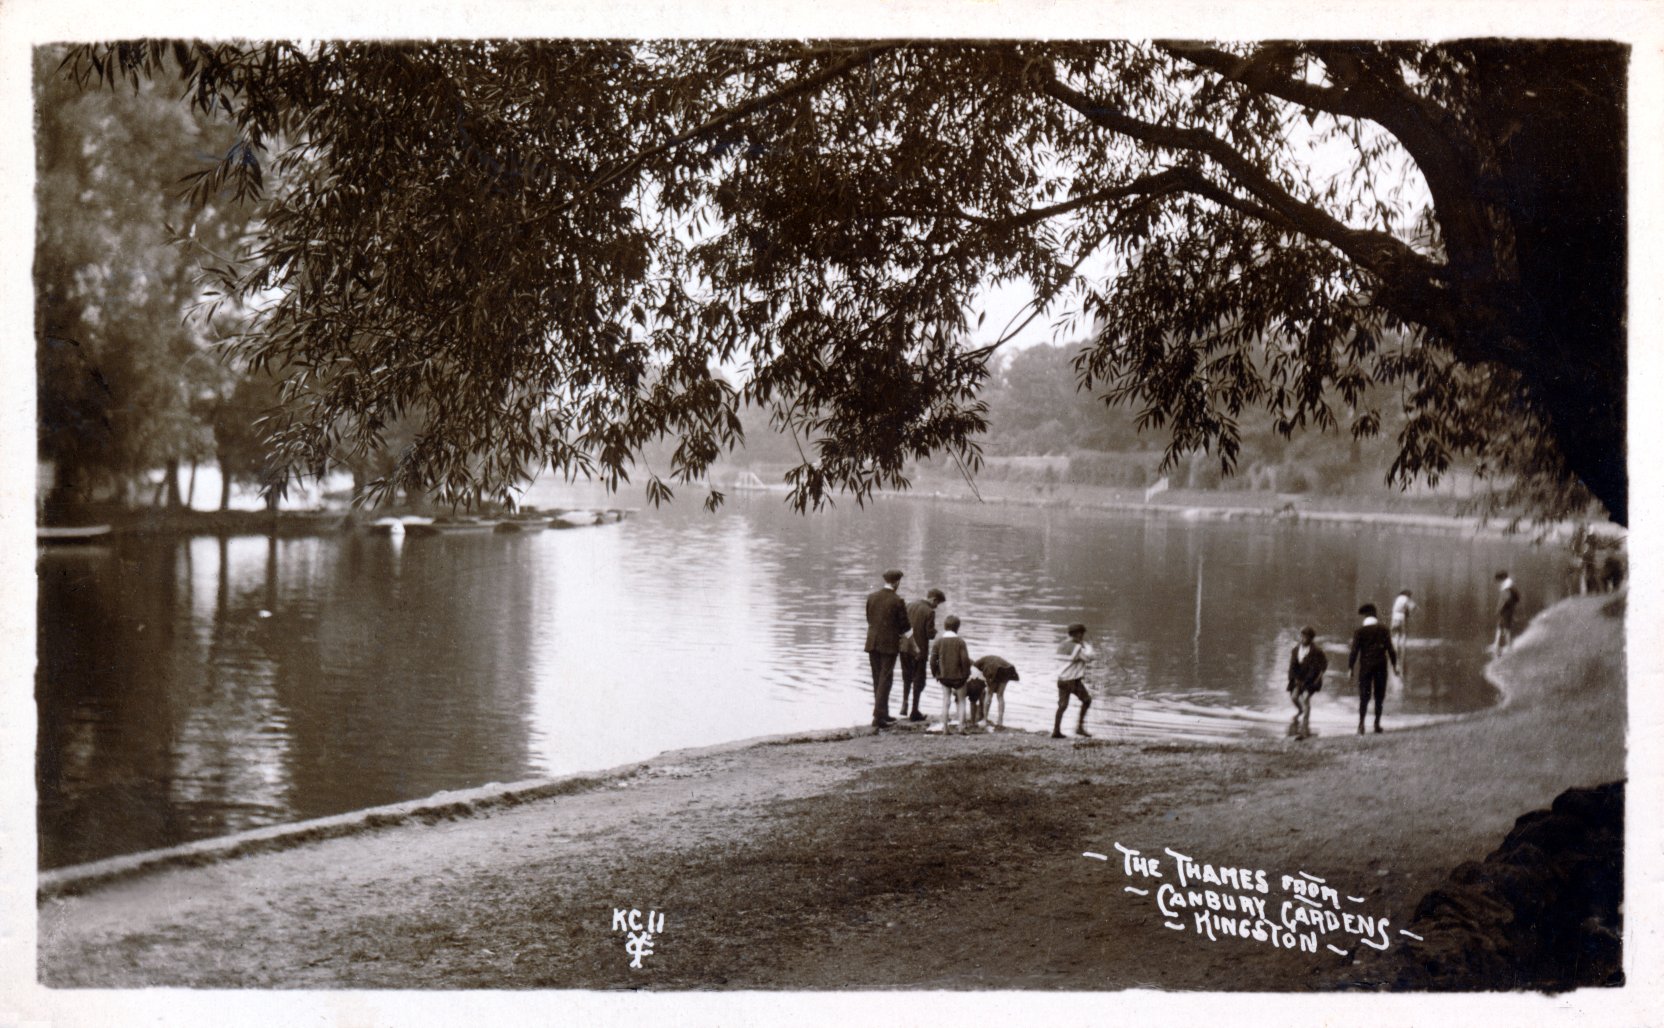 Kingston Canbury Gardens,river view,children paddling